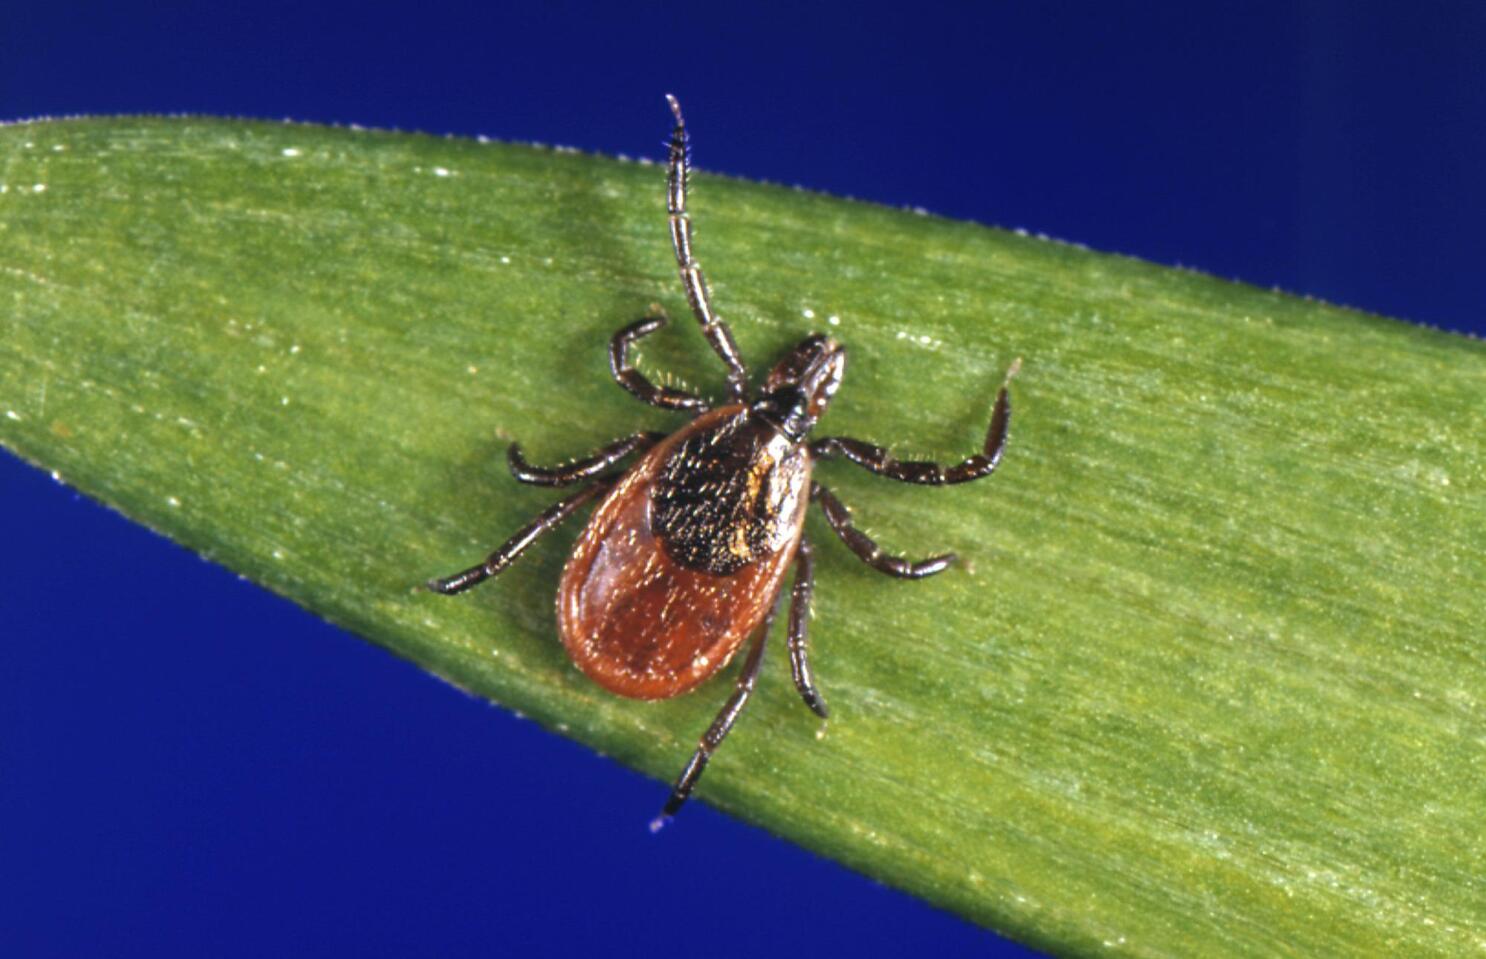 How ticks spread disease, Ticks